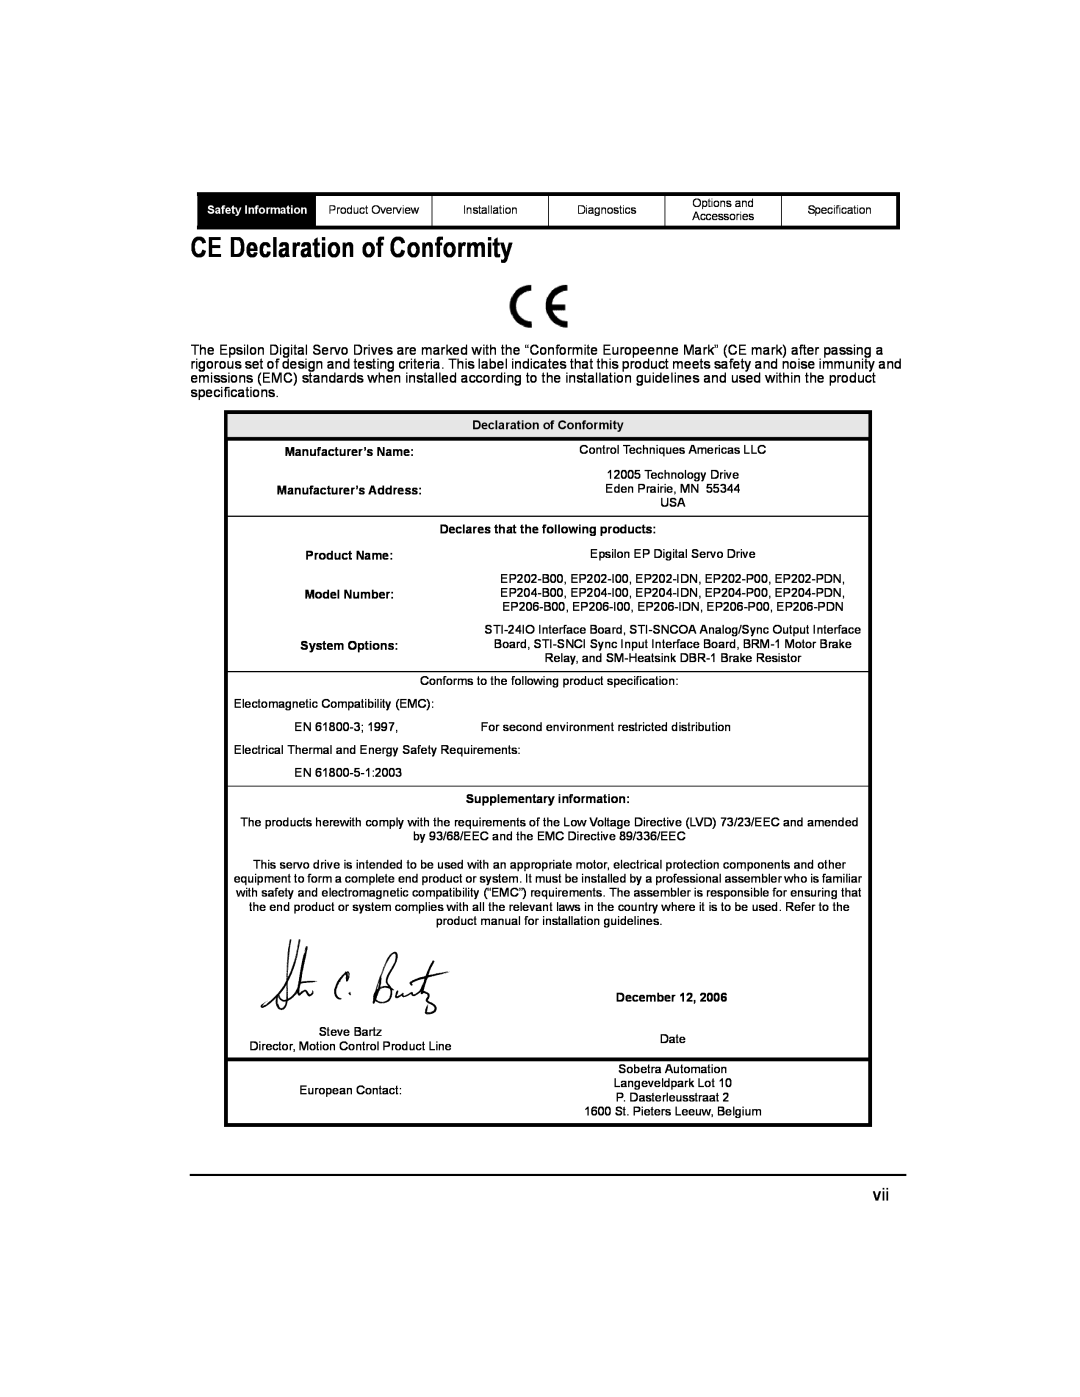 Emerson 400518-01 CE Declaration of Conformity, Safety Information, Manufacturer’s Name, Manufacturer’s Address 